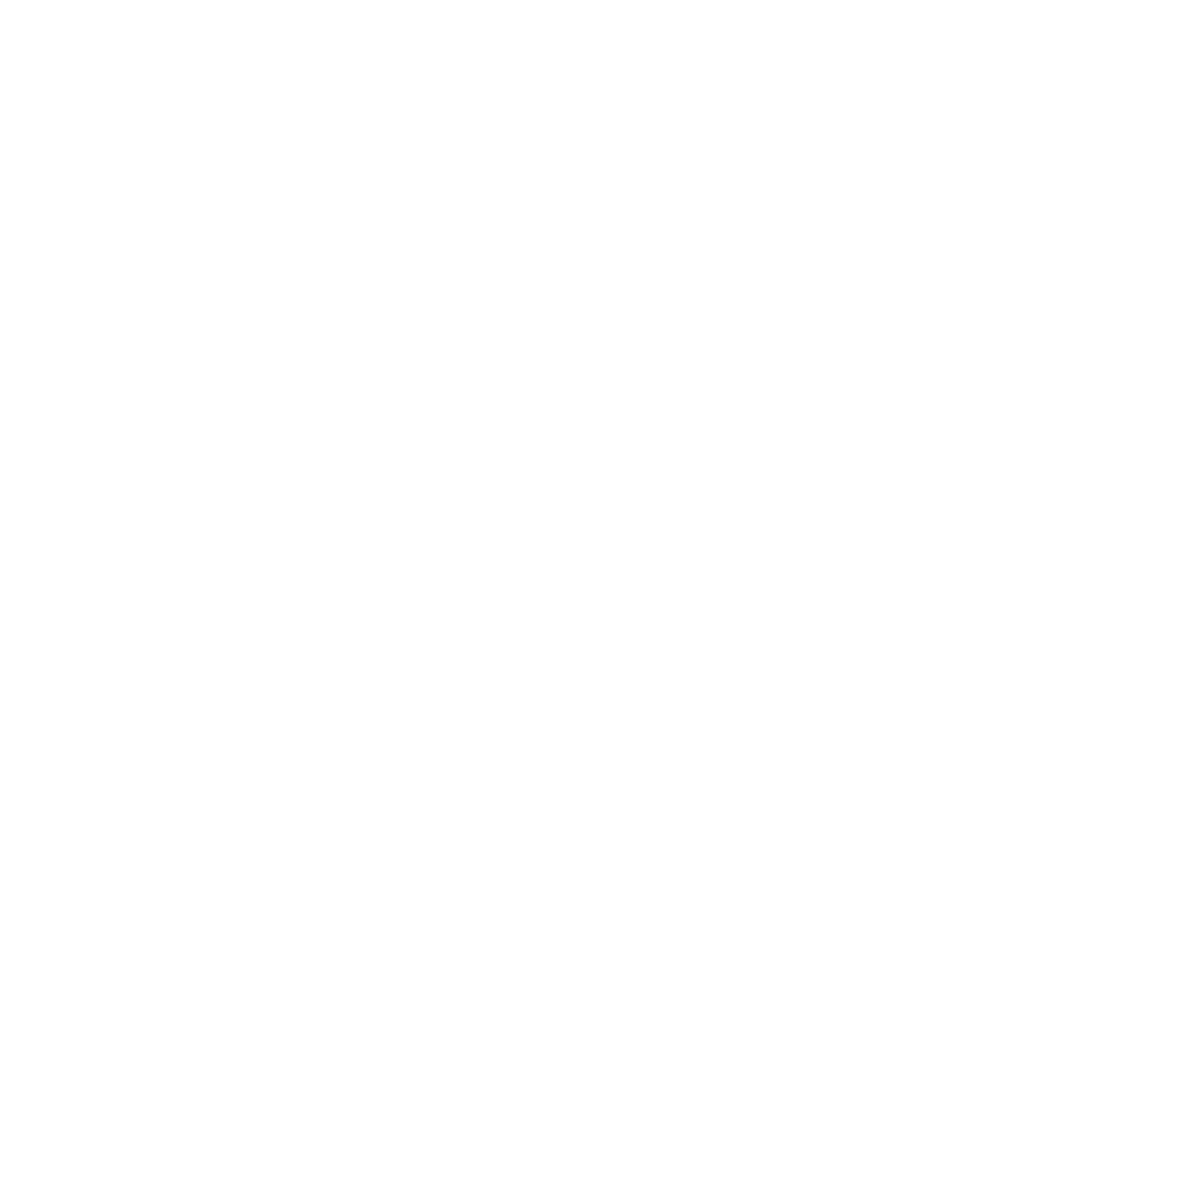 Century 21 Ocean Realty